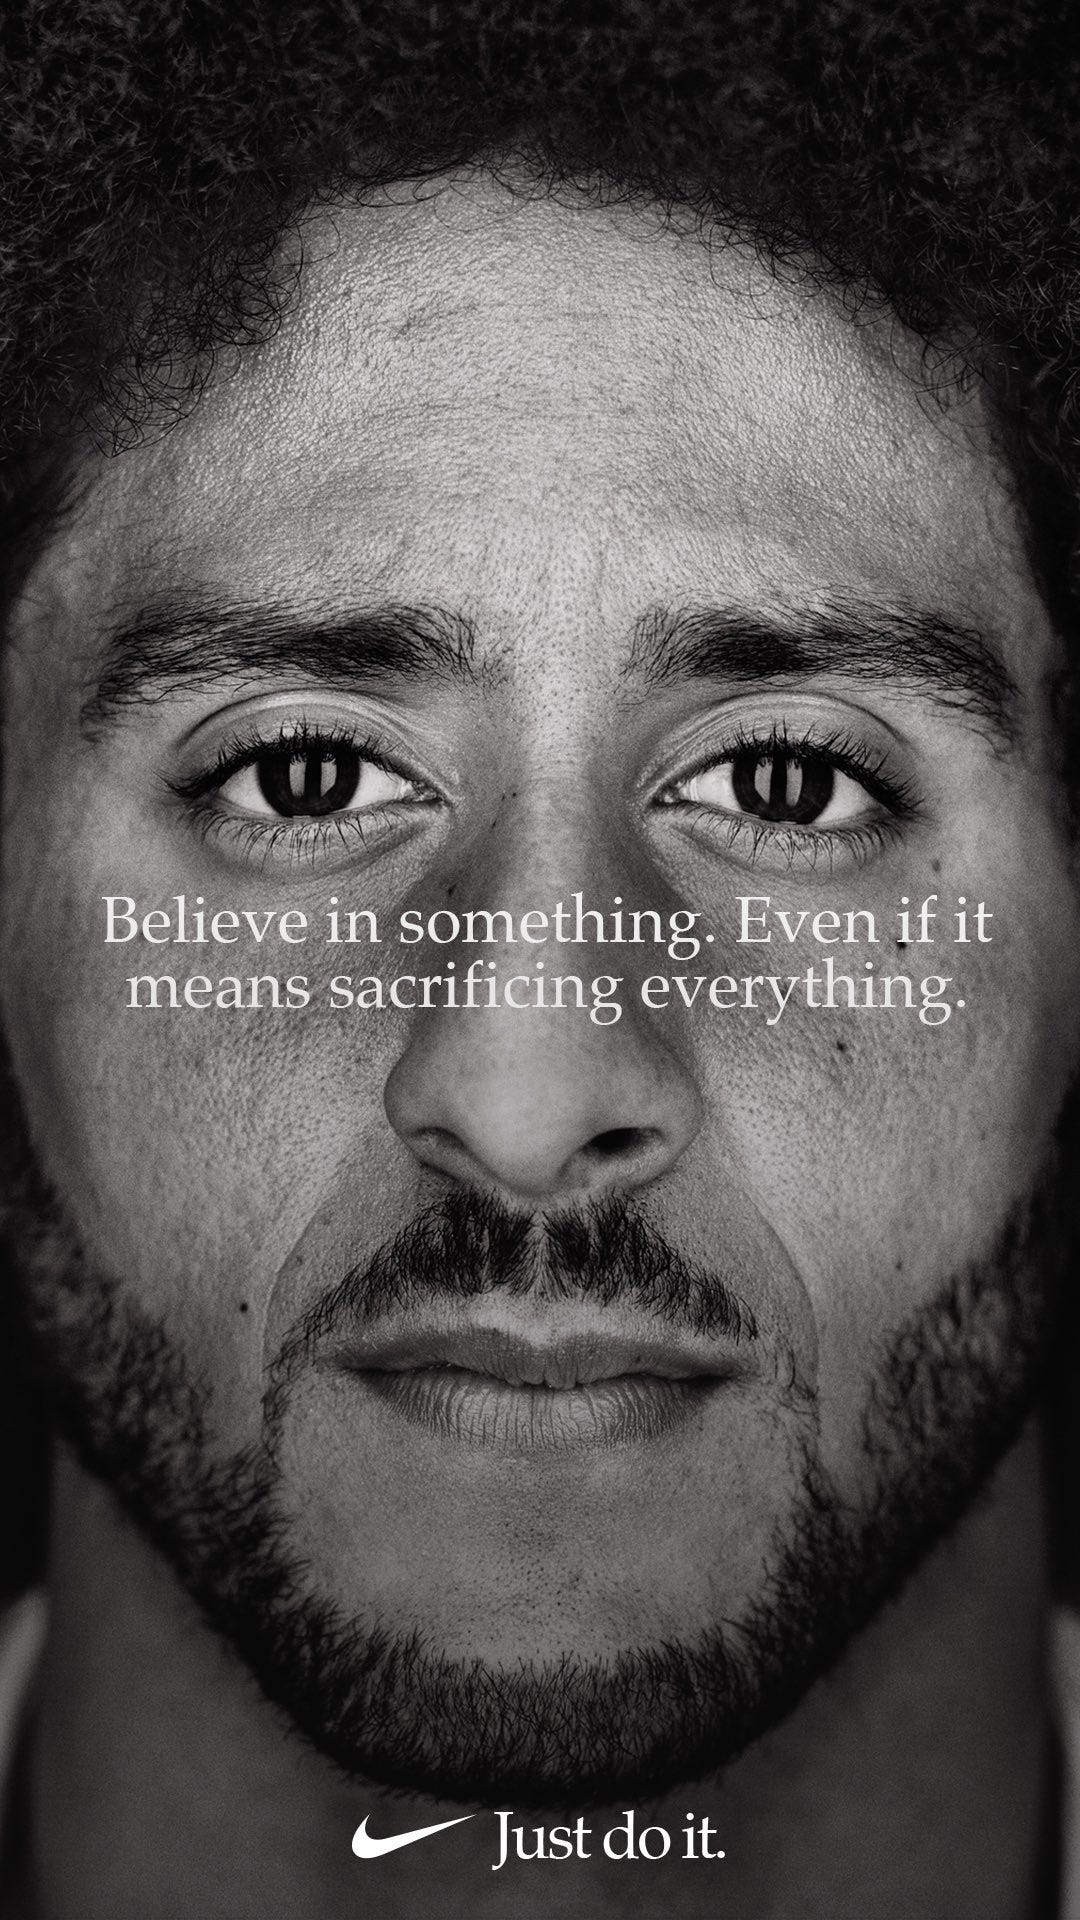 Colin Kaepernick ad, I'm boycotting Nike